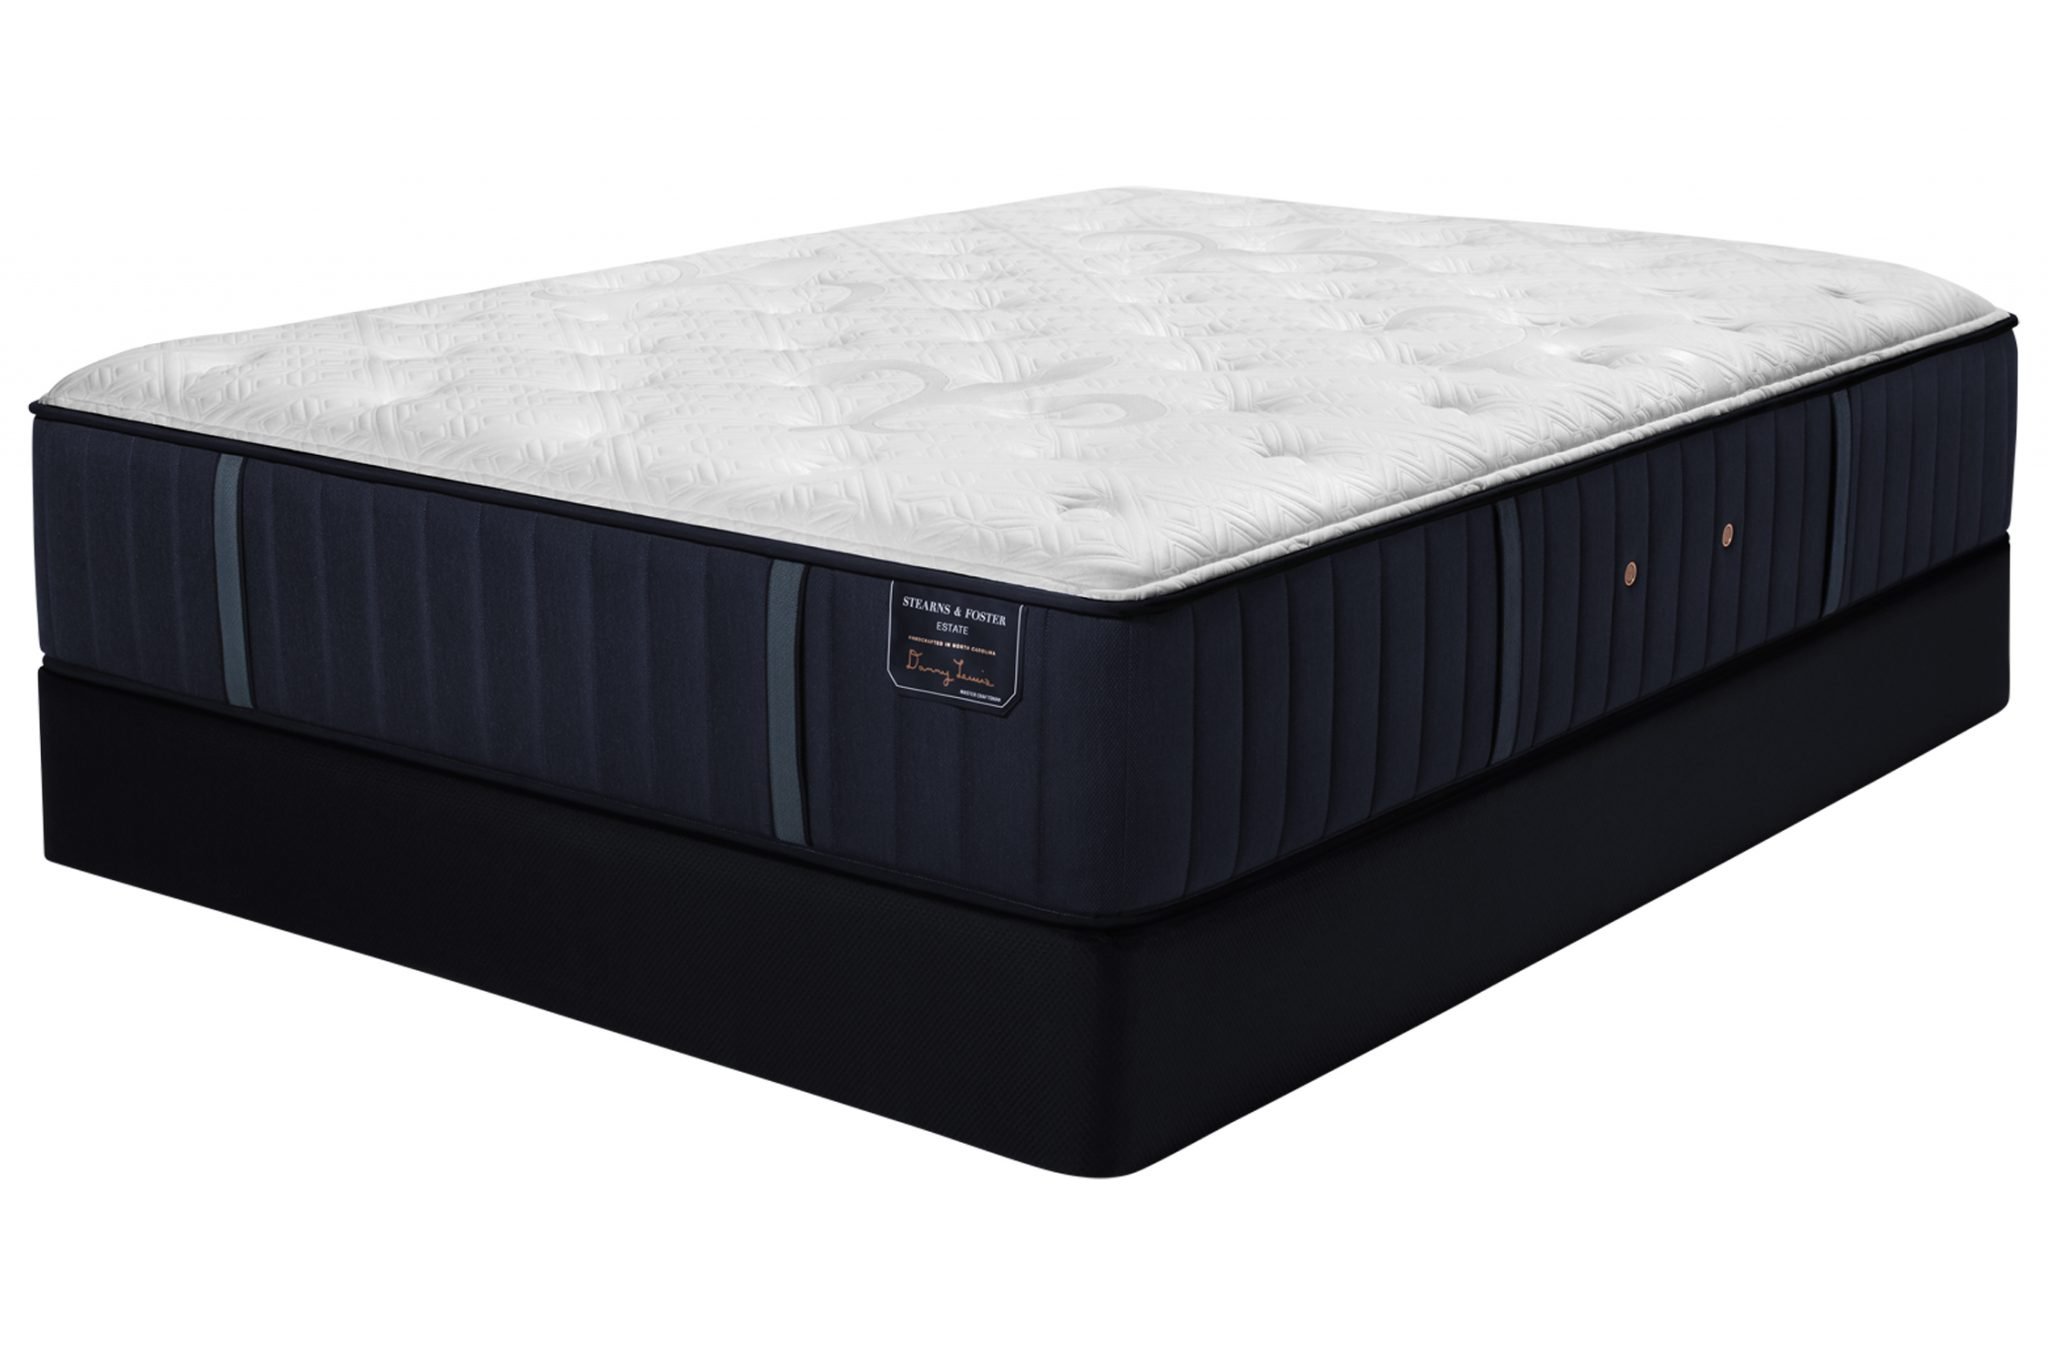 stearns & foster hurston luxury plush queen mattress